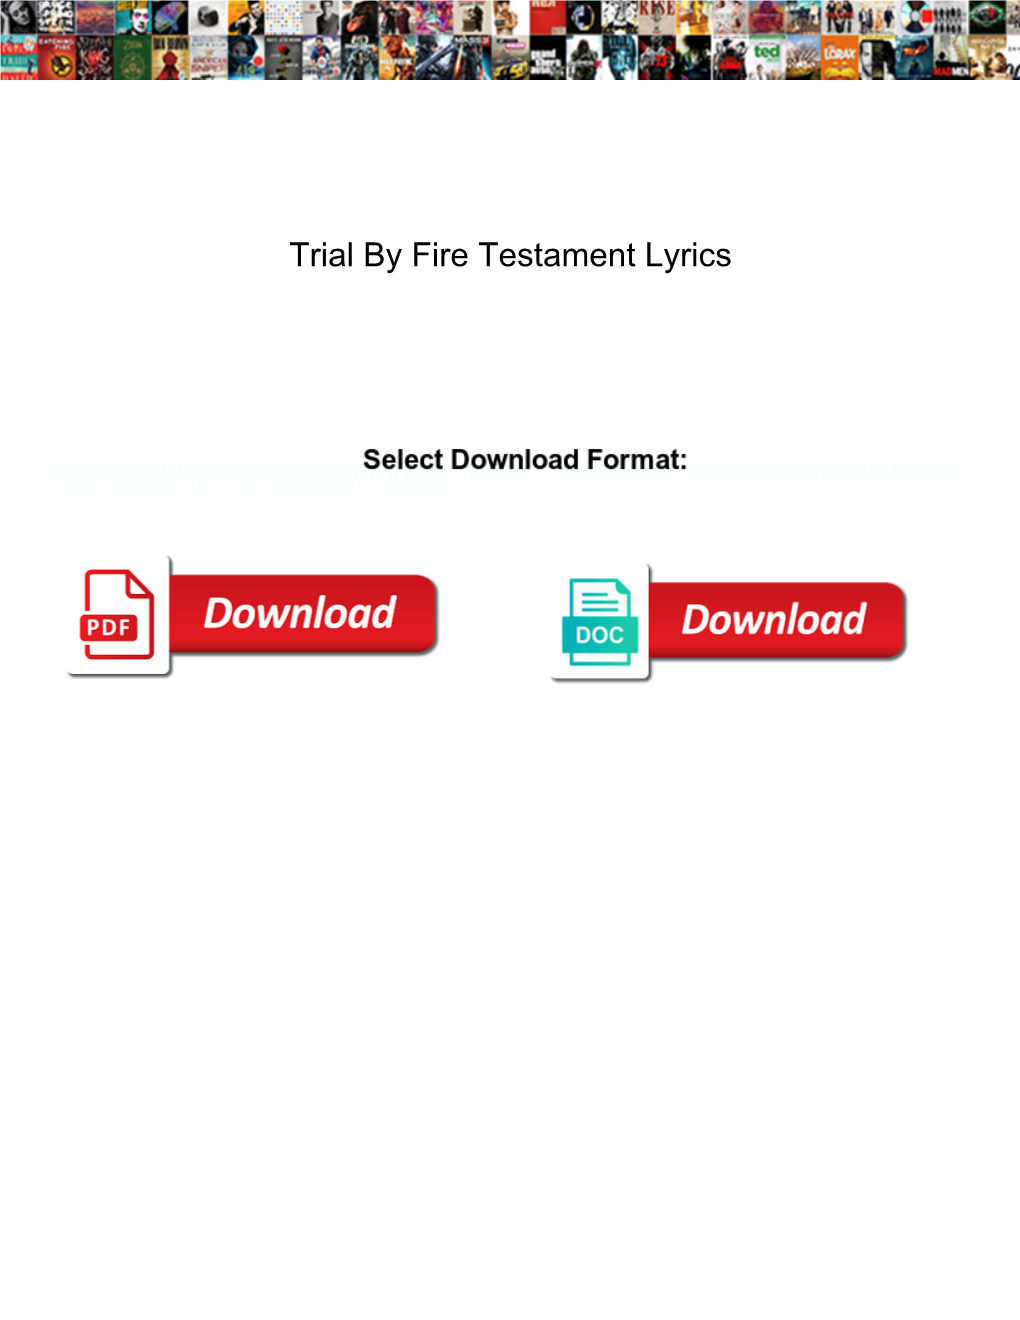 Trial by Fire Testament Lyrics